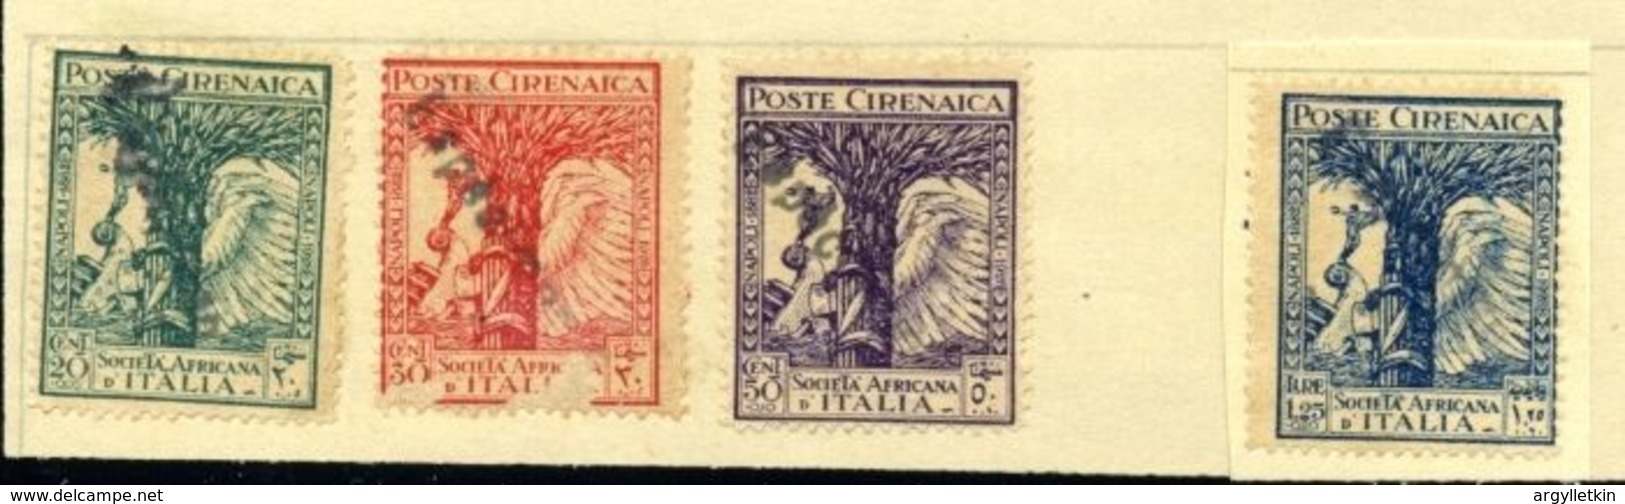 ITALIAN COLONIES CYRENAICA 1928 ITALIAN AFRICAN SOCIETY - Cirenaica